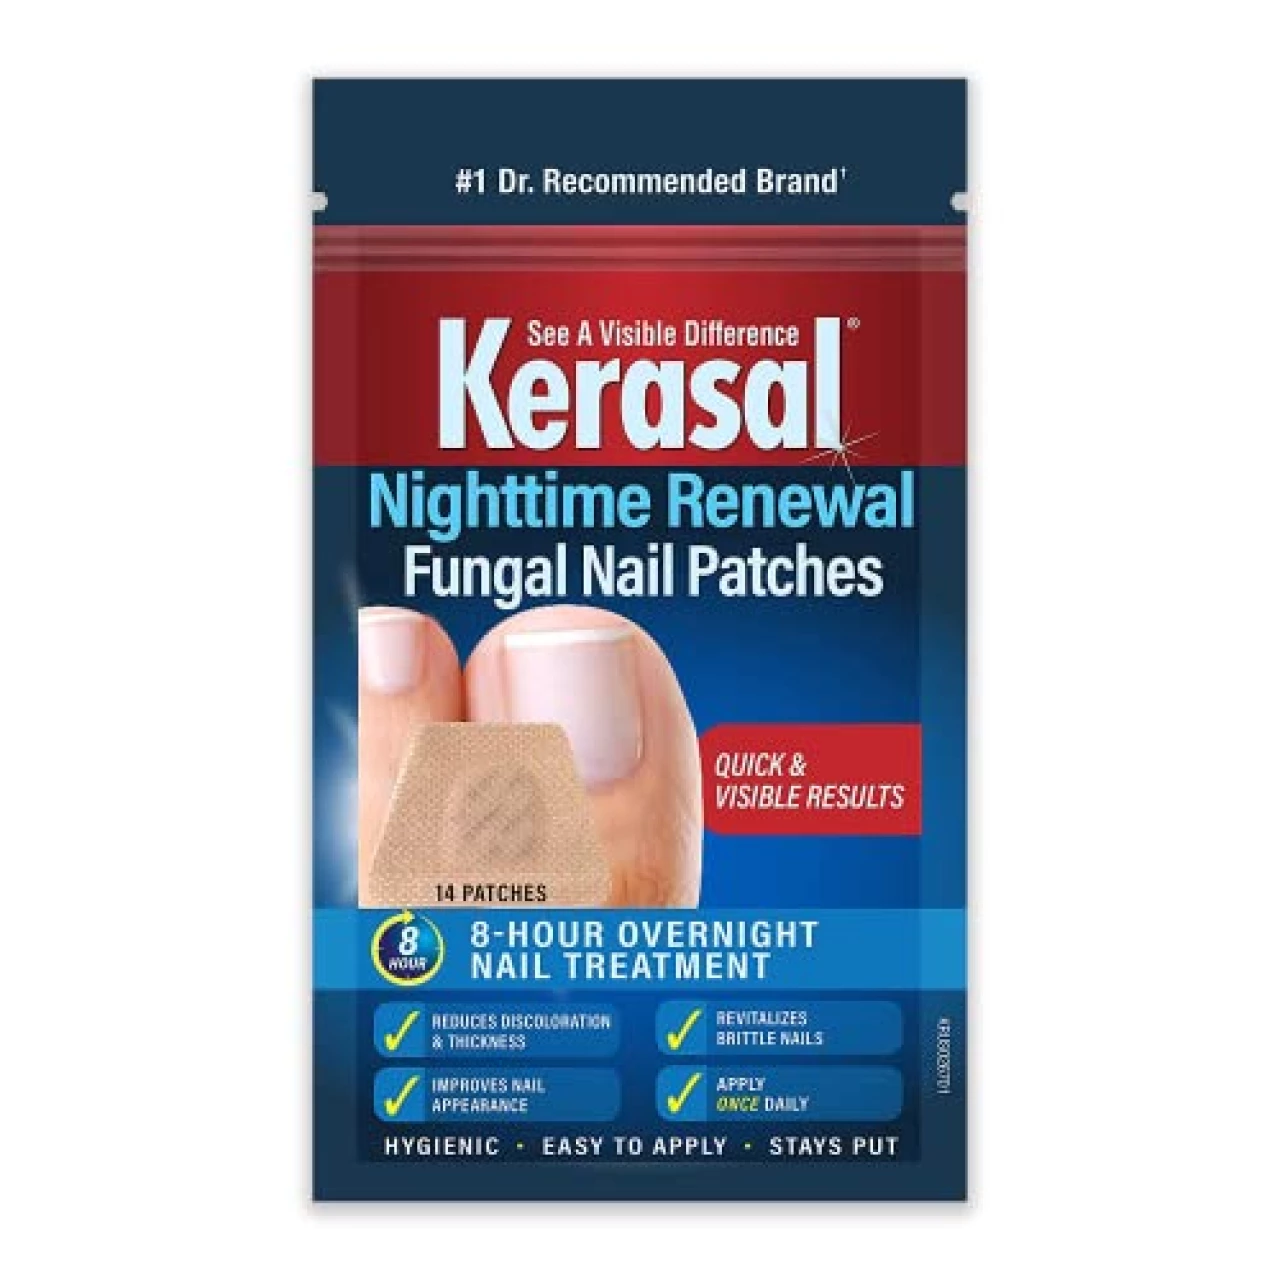 Kerasal Nighttime Renewal Fungal Nail Patches - 14 Patch - Overnight Nail Repair for Nail Fungus Damage